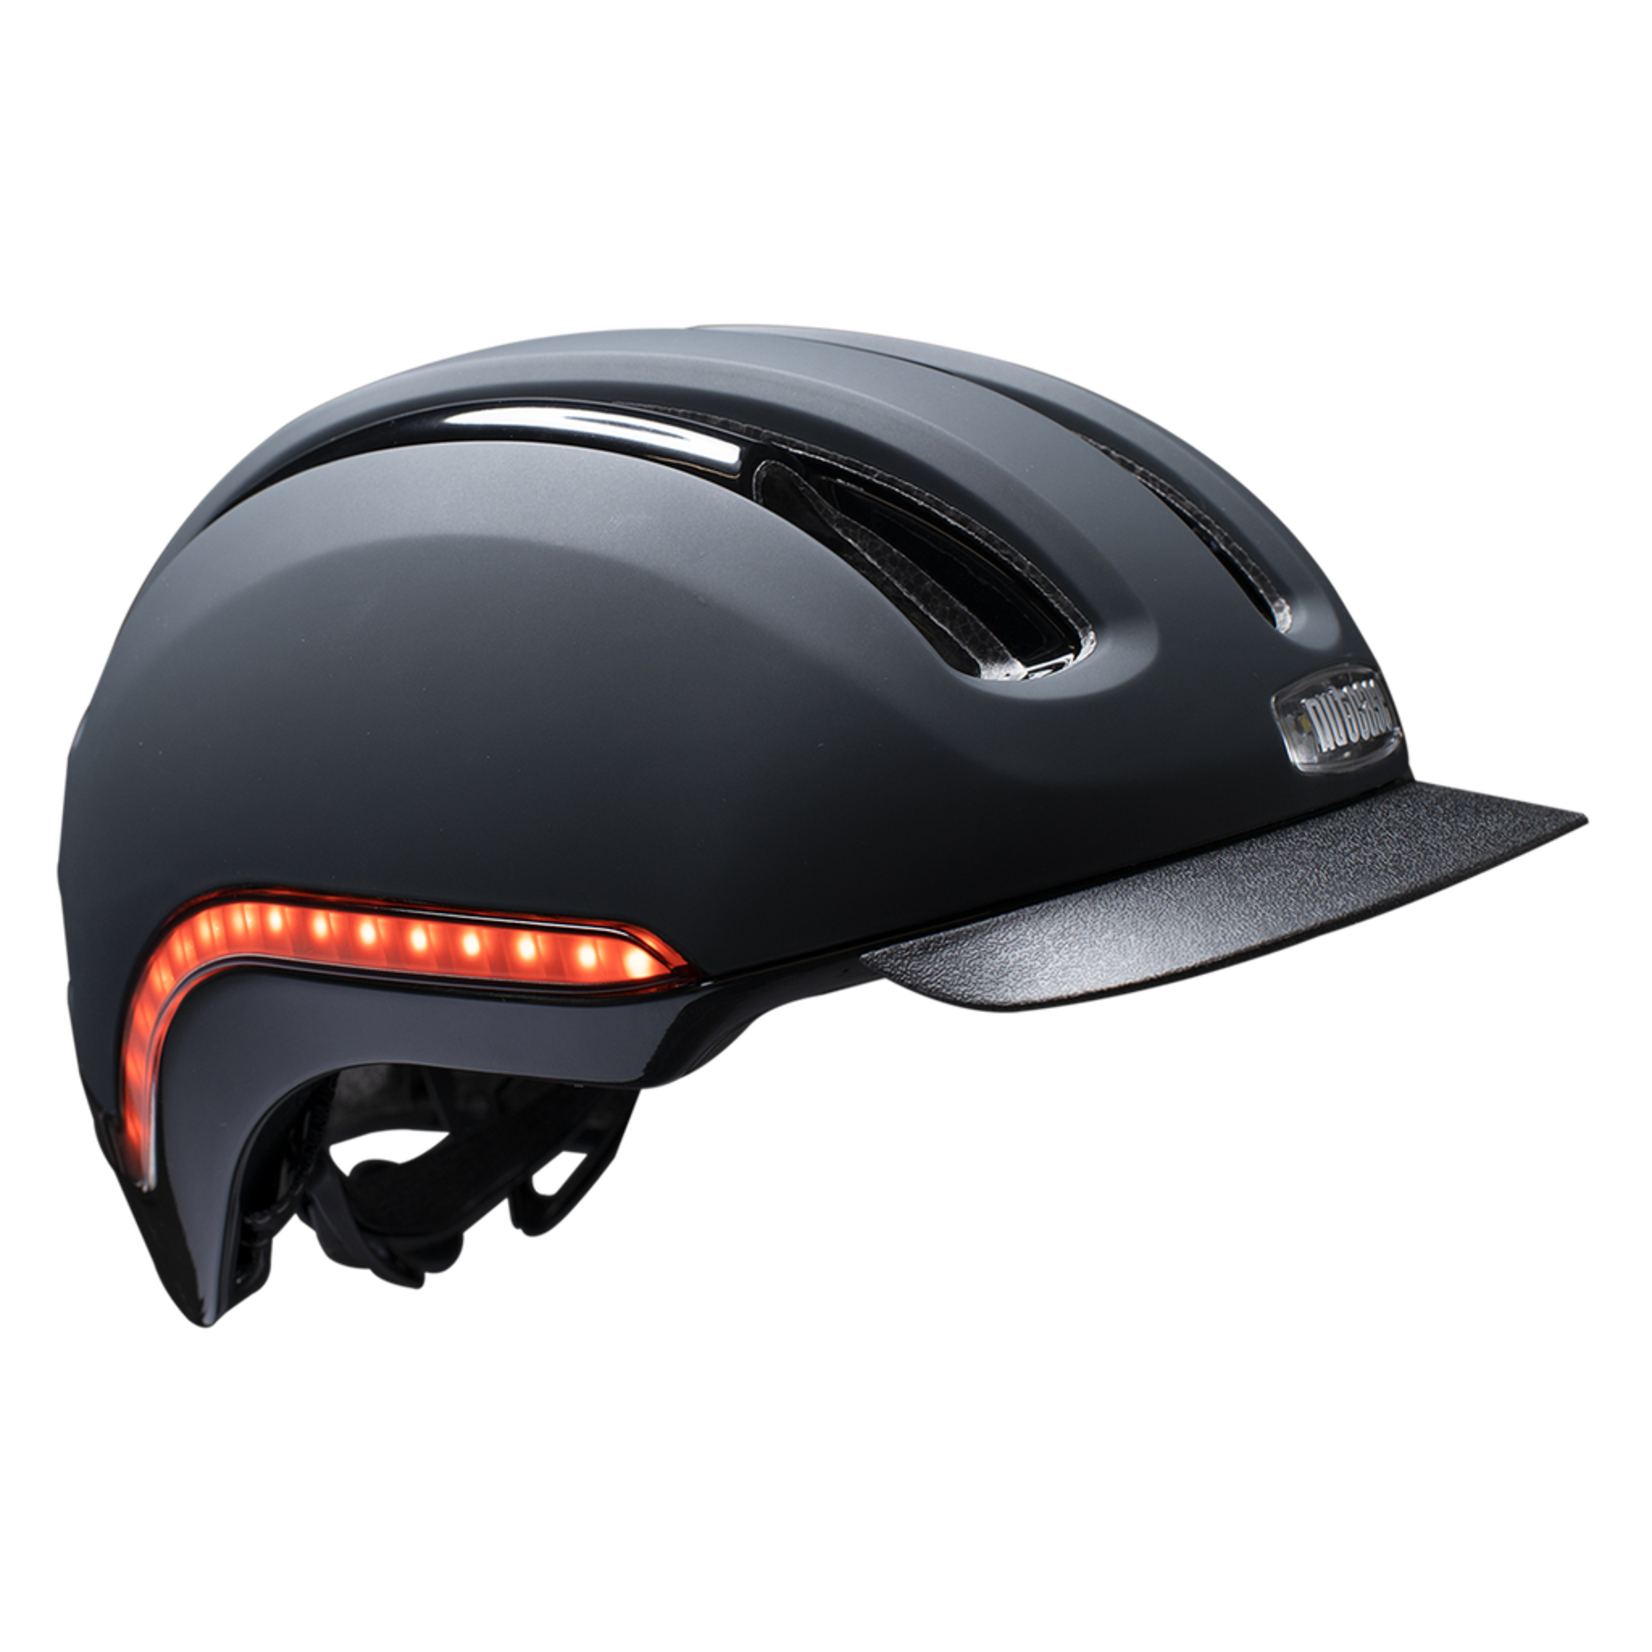 Nutcase Nutcase Vio Helmet with MIPS and Light